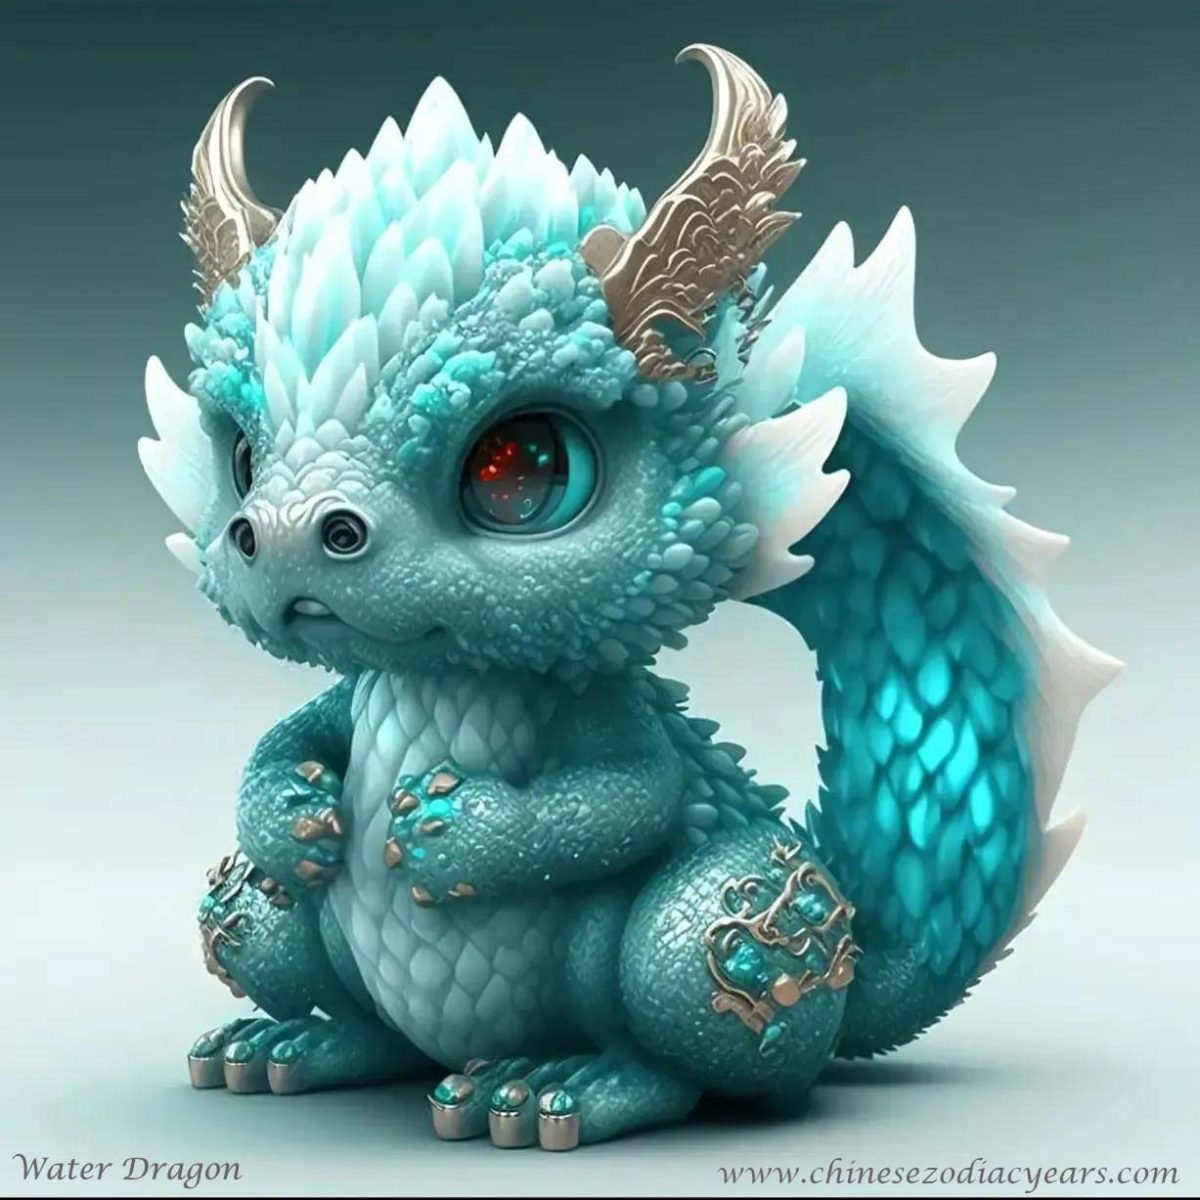 2012 Chinese Zodiac: Water Dragon